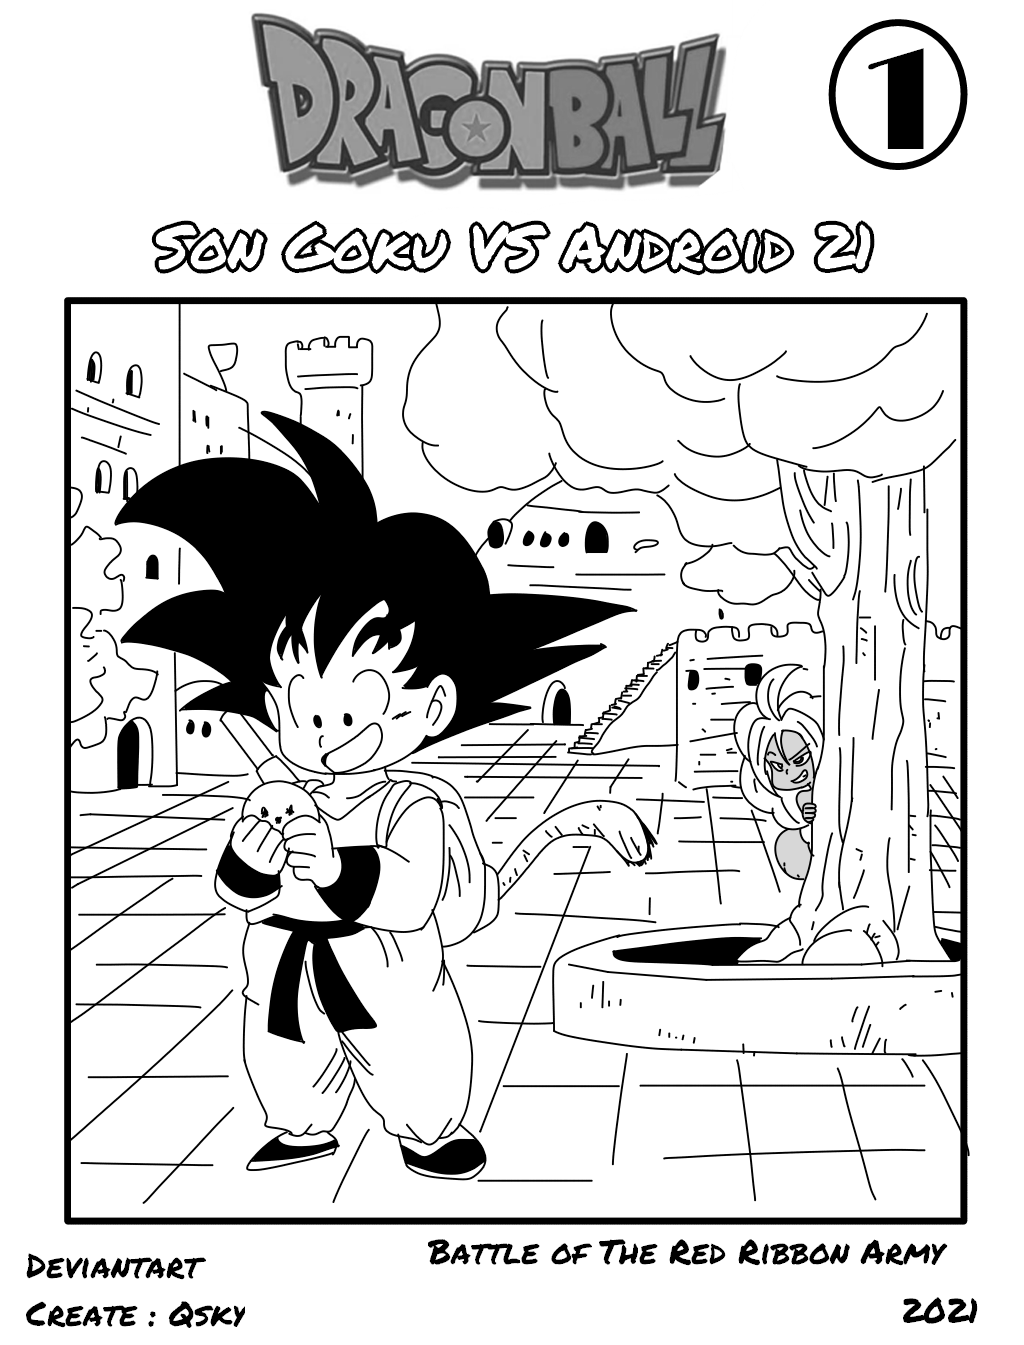 Dragon Ball Goku x Android 21 Manga 1 by Qsky on DeviantArt